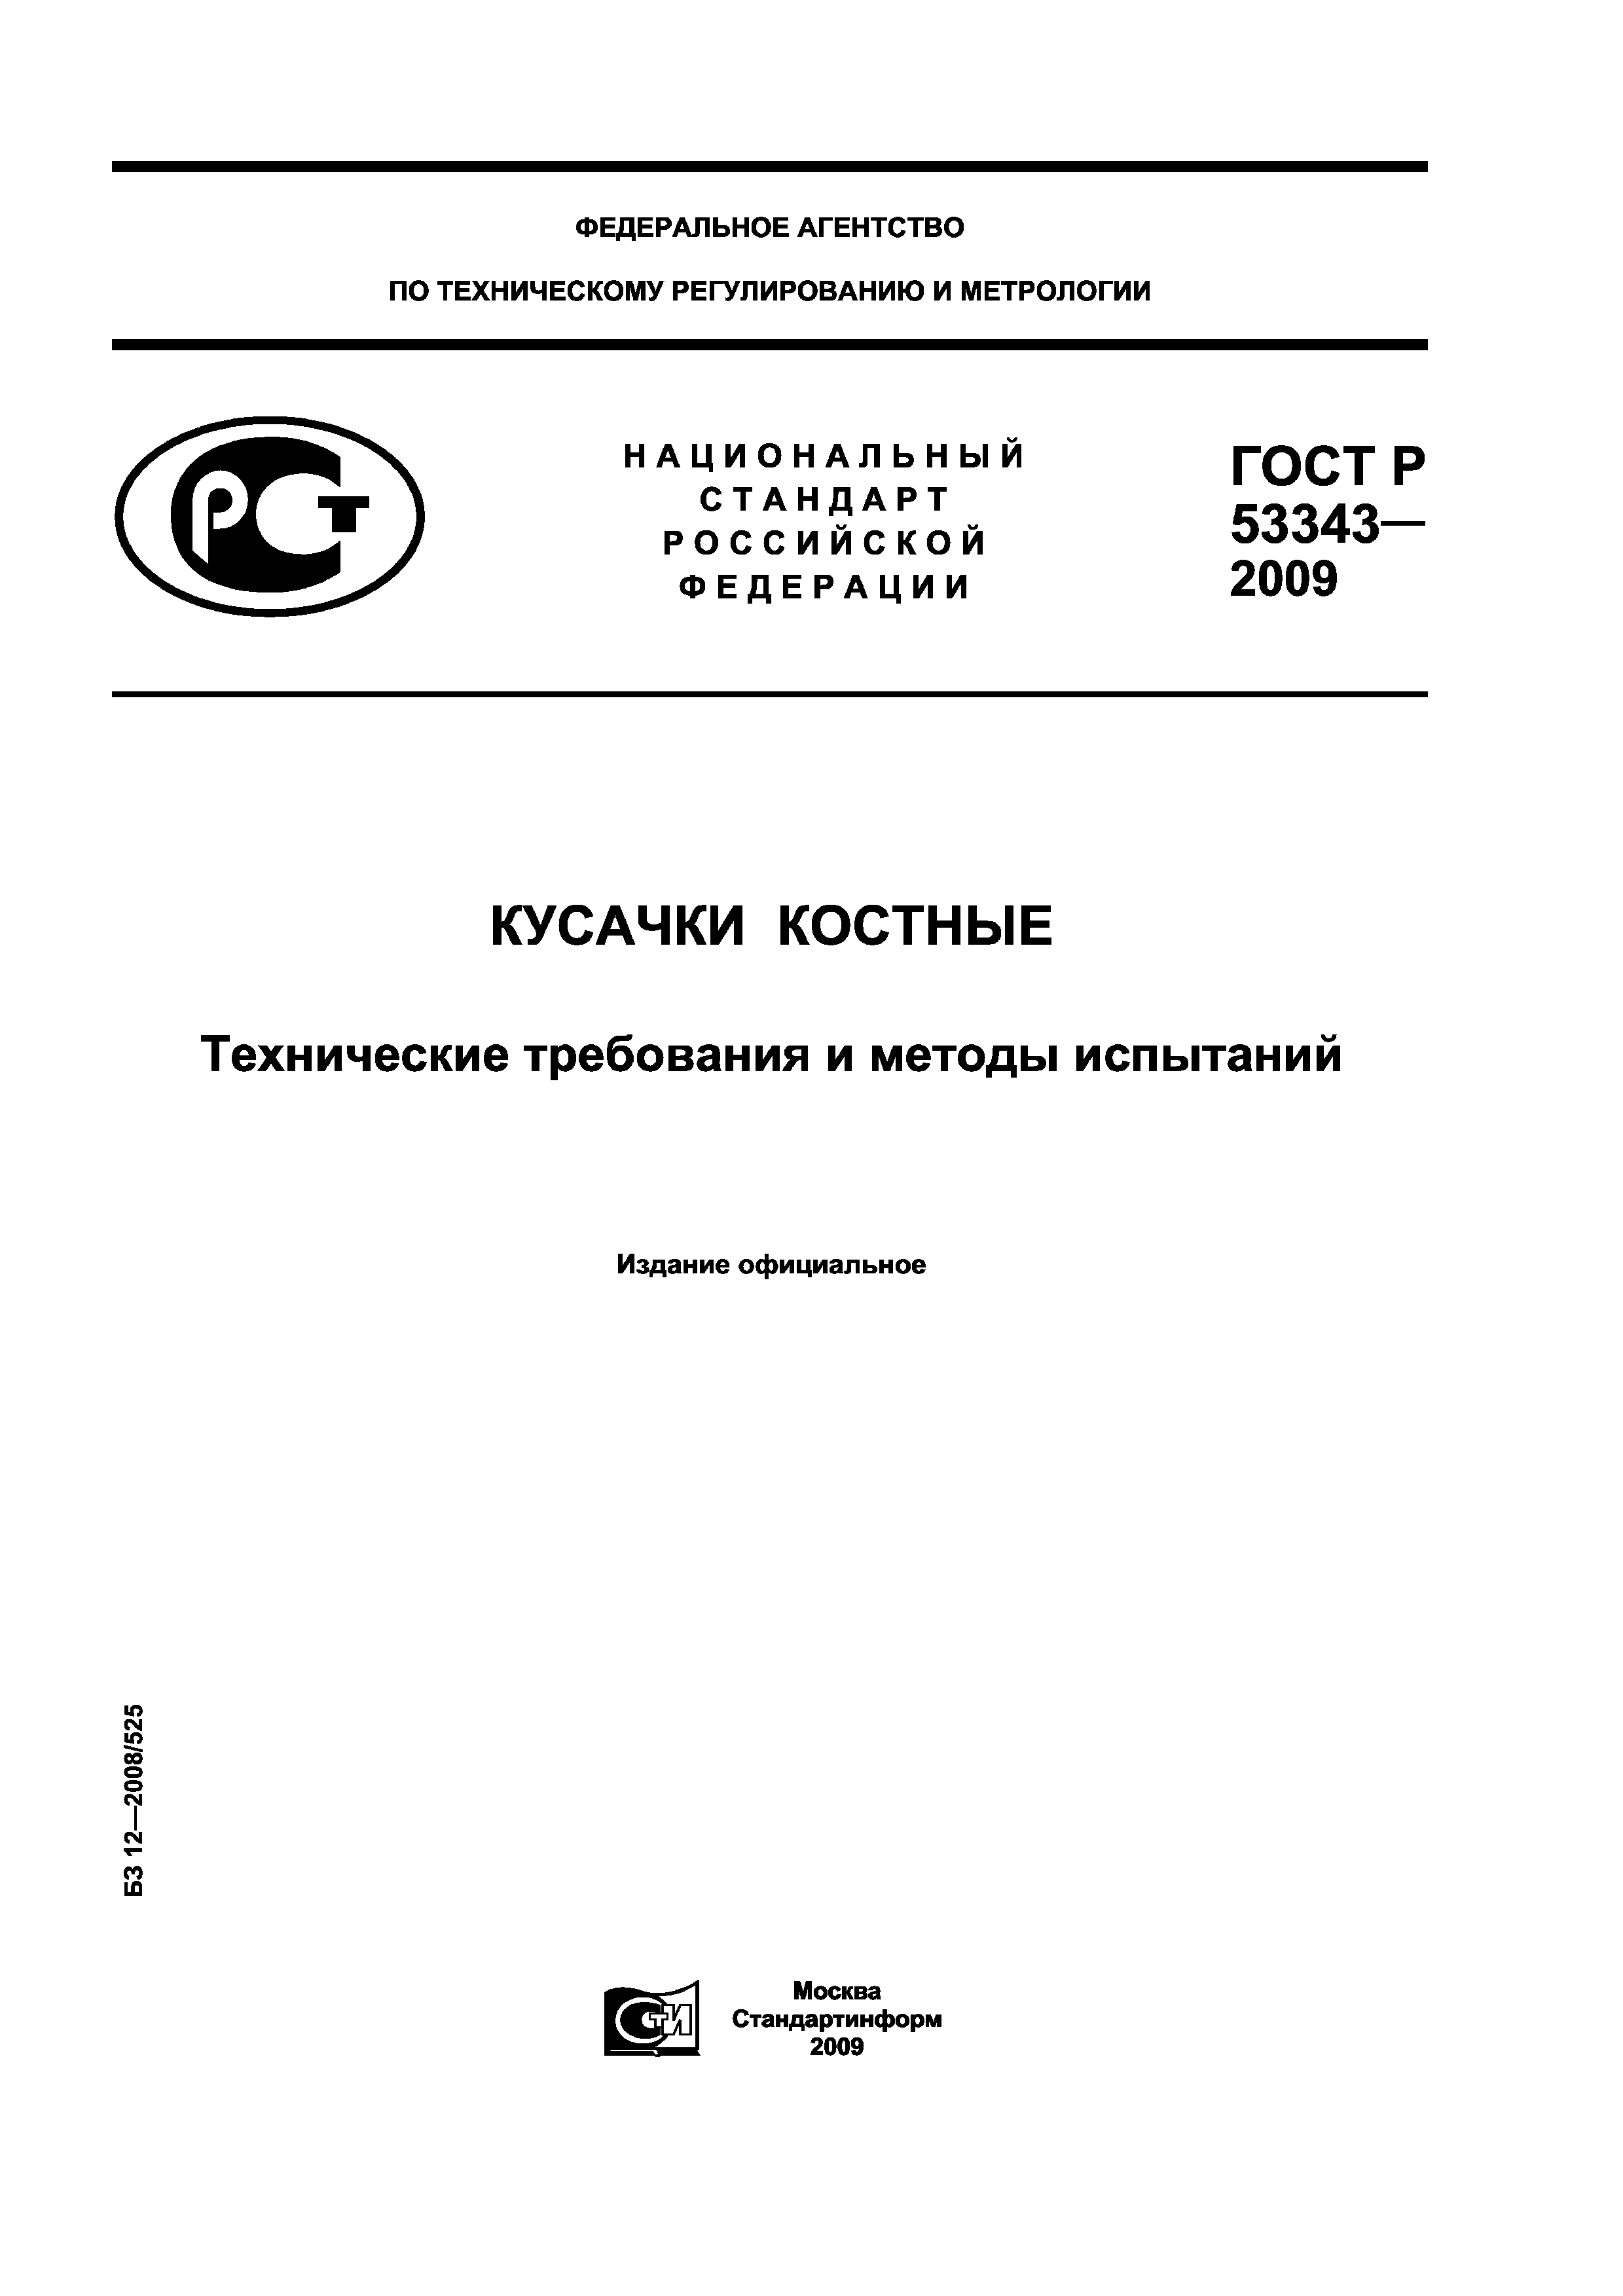 ГОСТ Р 53343-2009